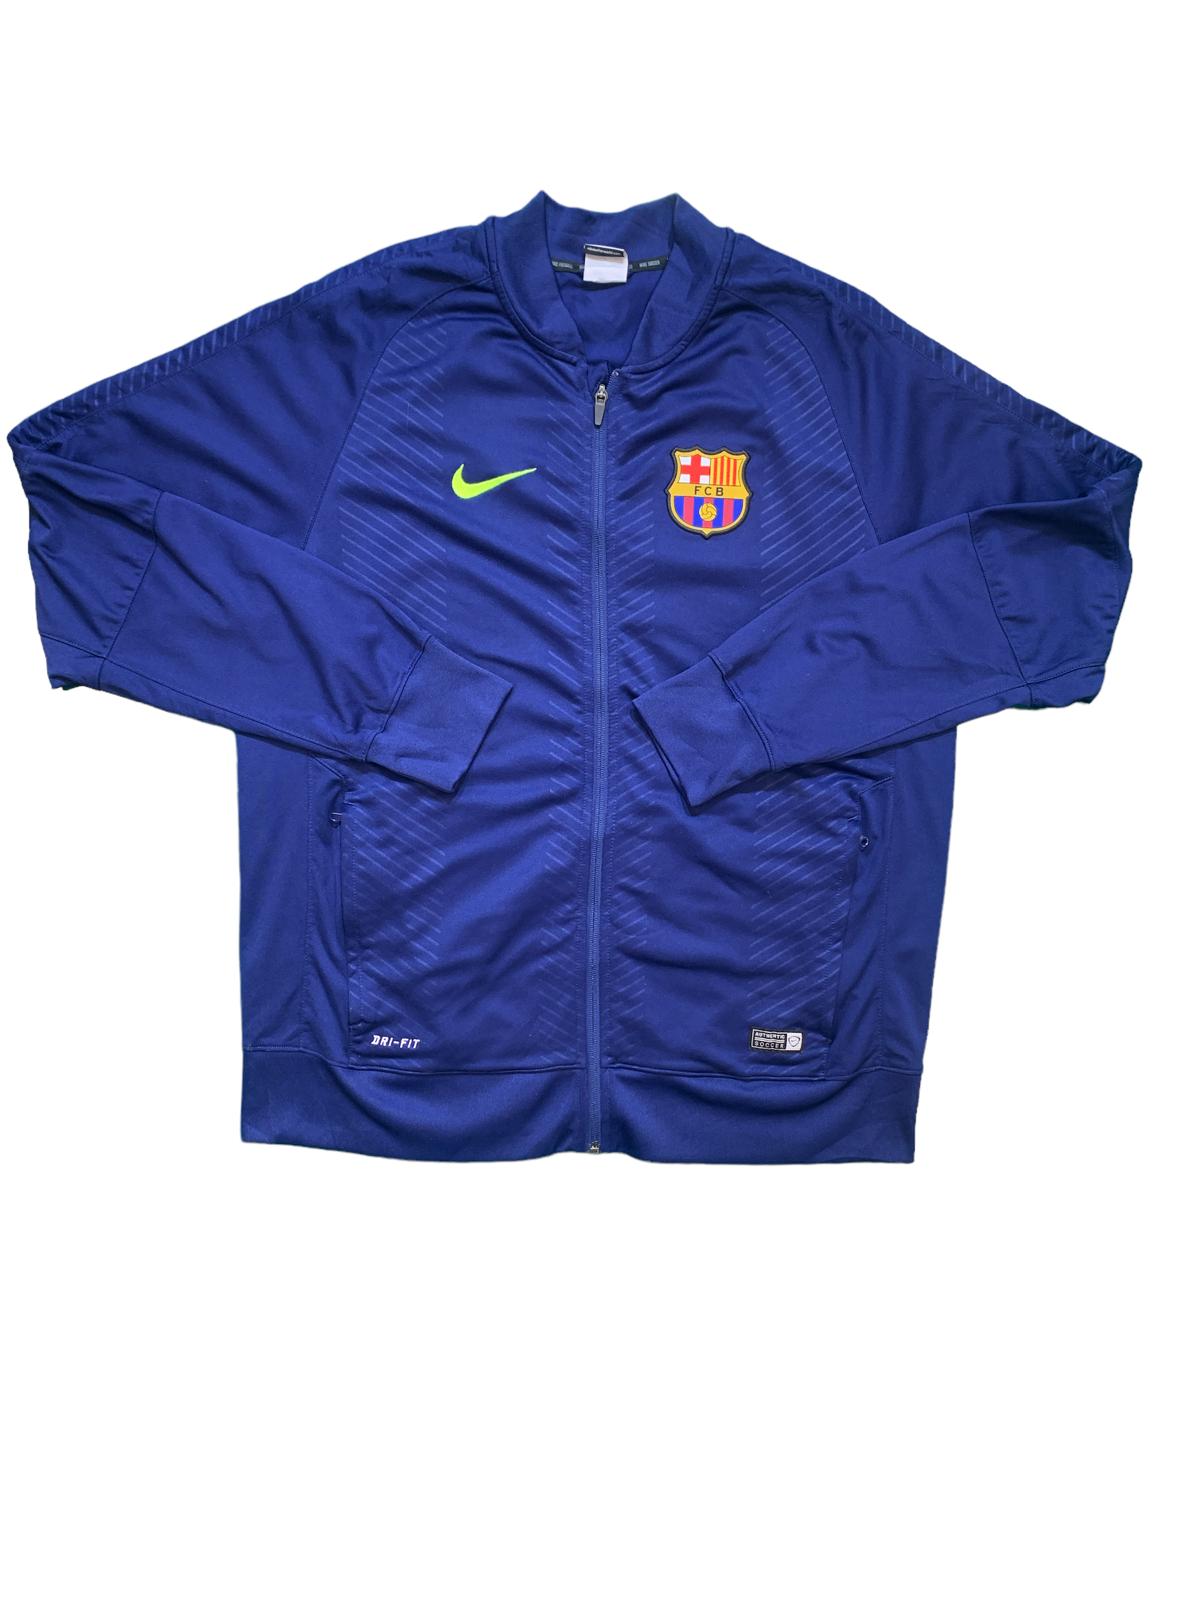 Mens Nike Barcelona Track Jacket - XL